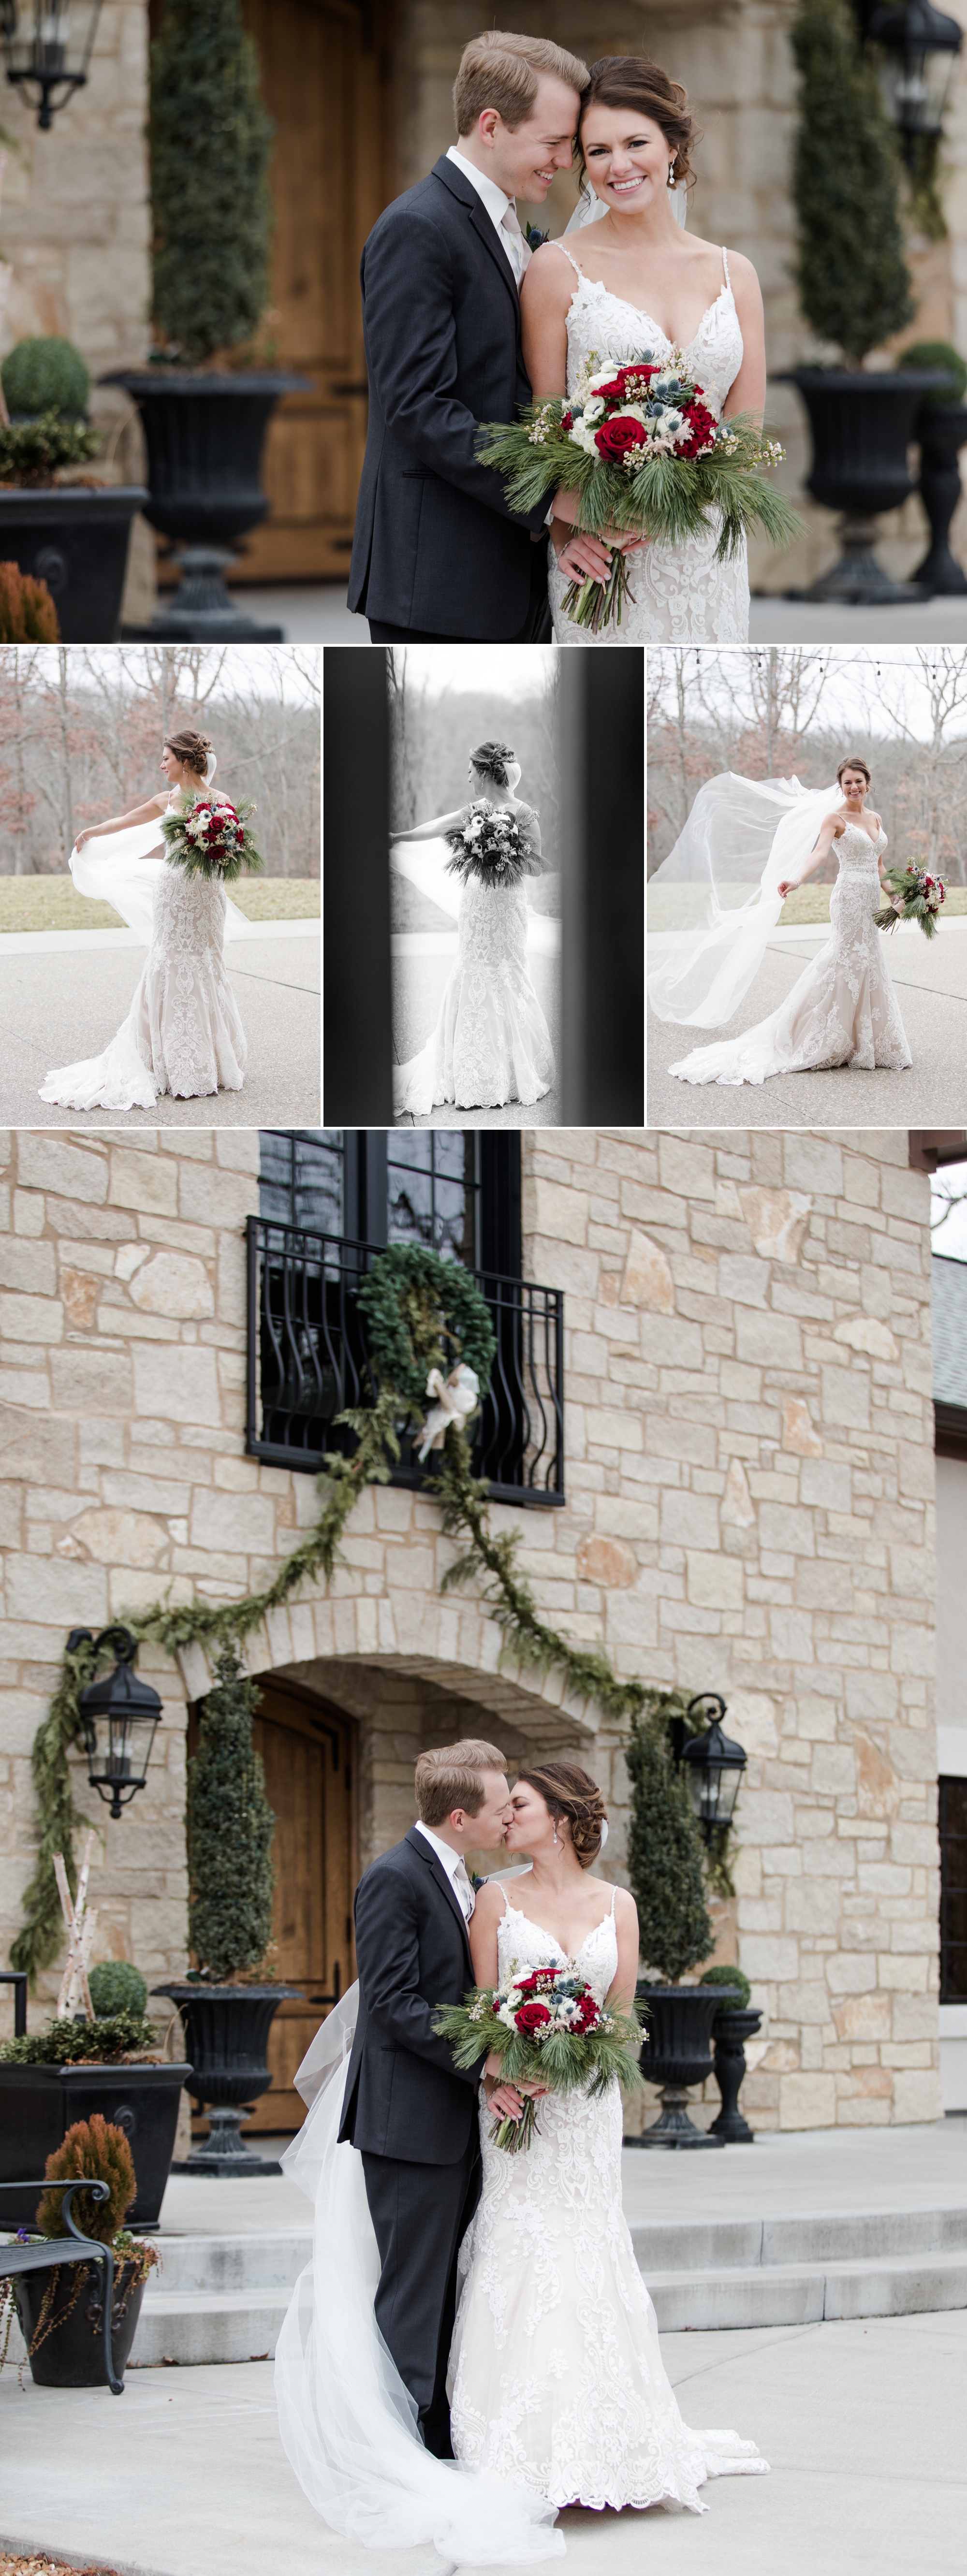 Silver Oaks Chateau Bride and Groom Dress Tux Veil Winter Wedding Photogenics on Location